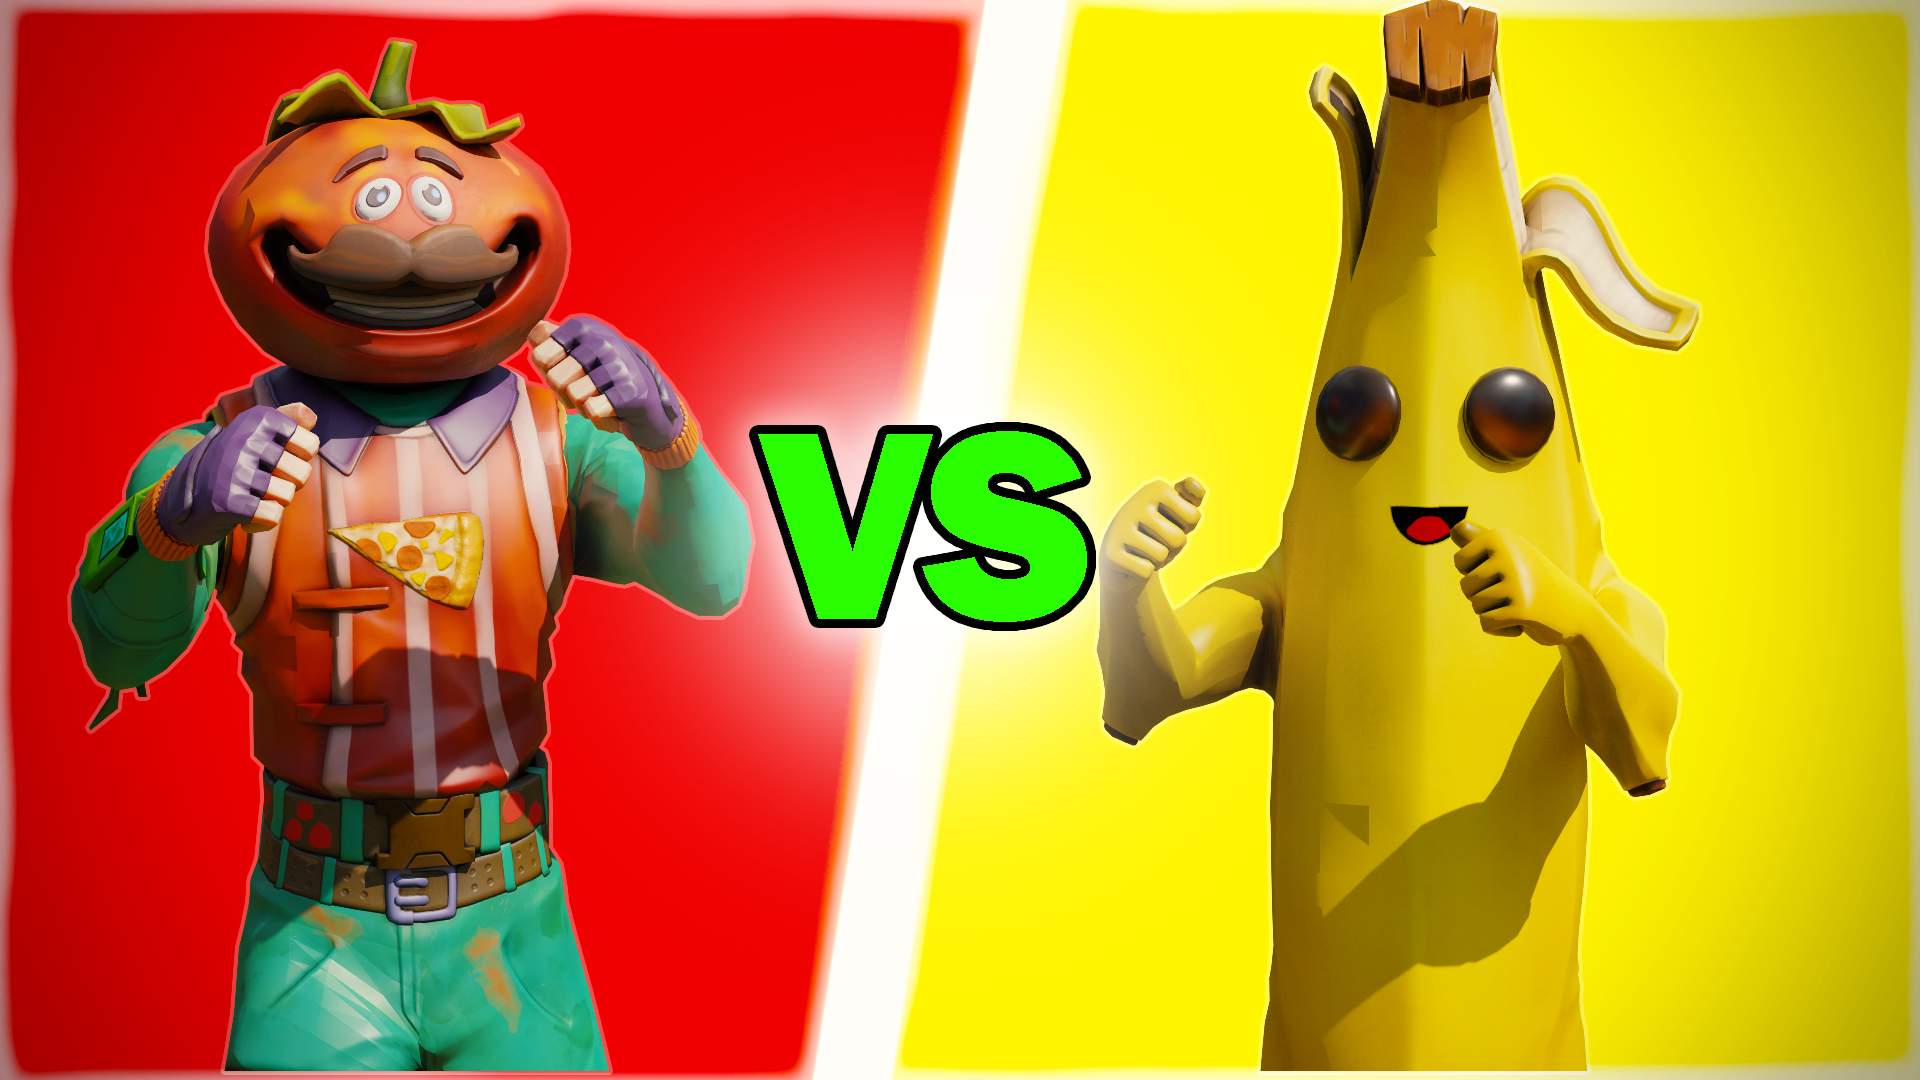 Tomatoes VS Bananas